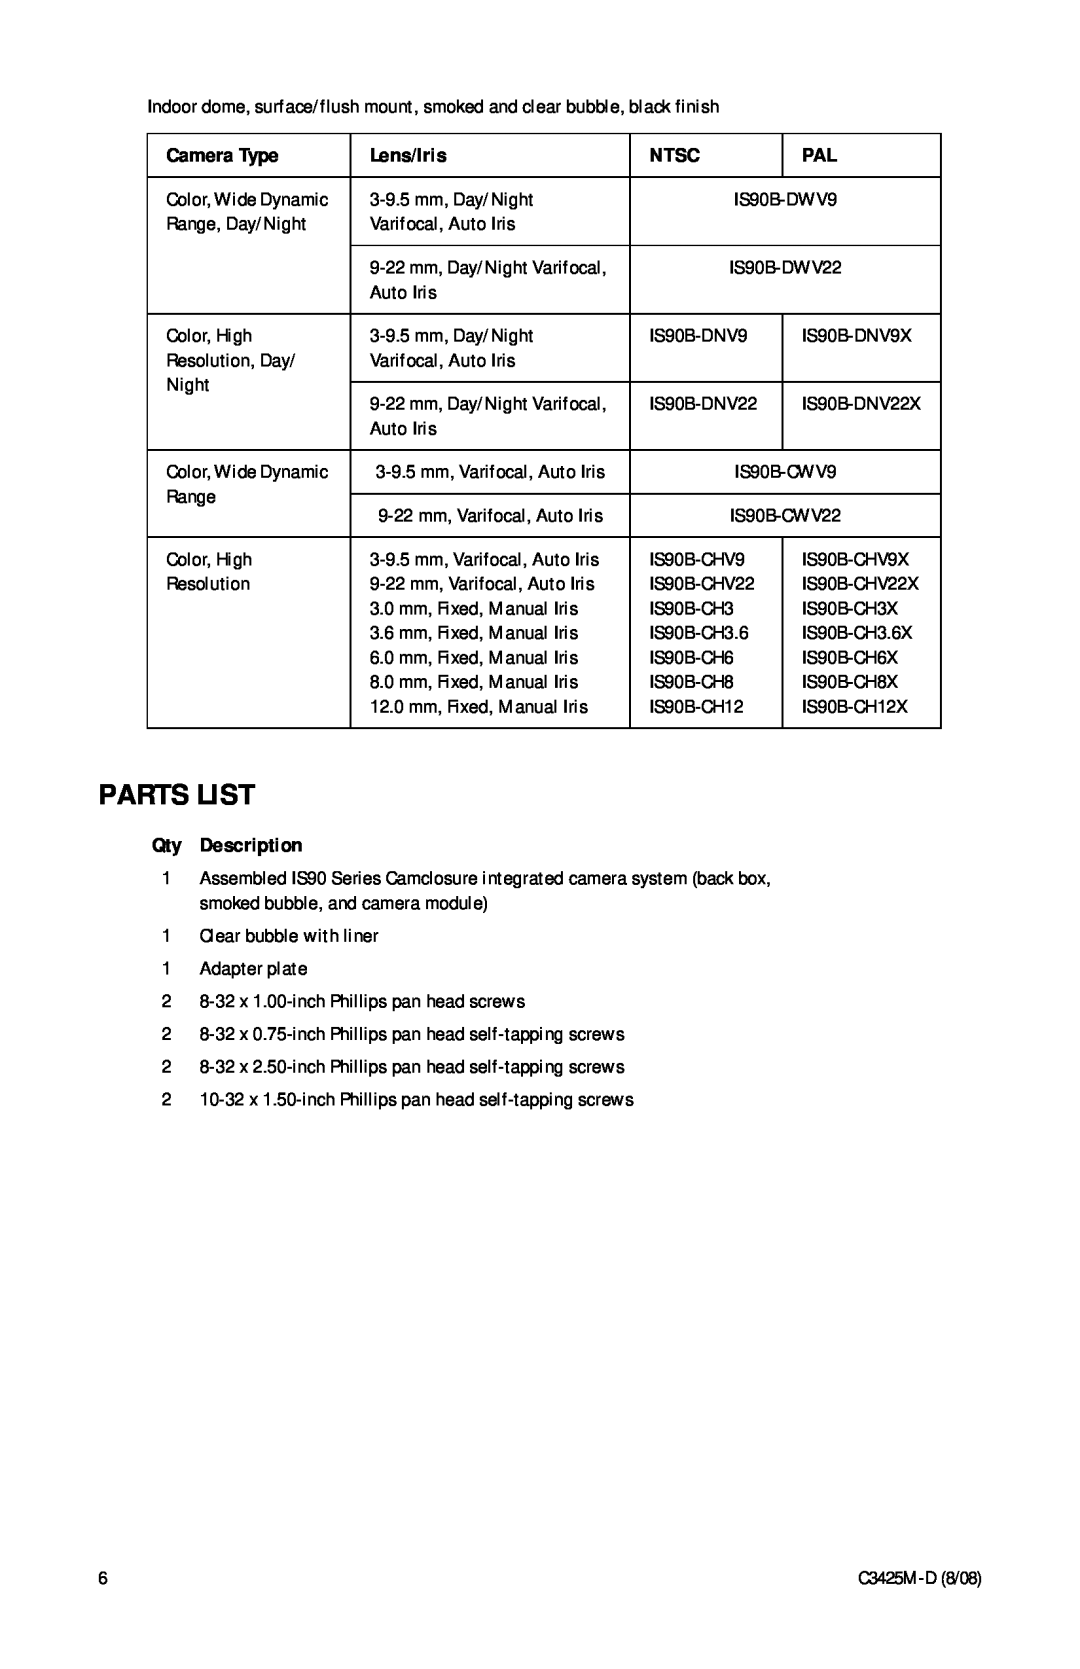 Pelco C3425M-D manual Parts List, Qty Description, Camera Type, Lens/Iris, Ntsc 